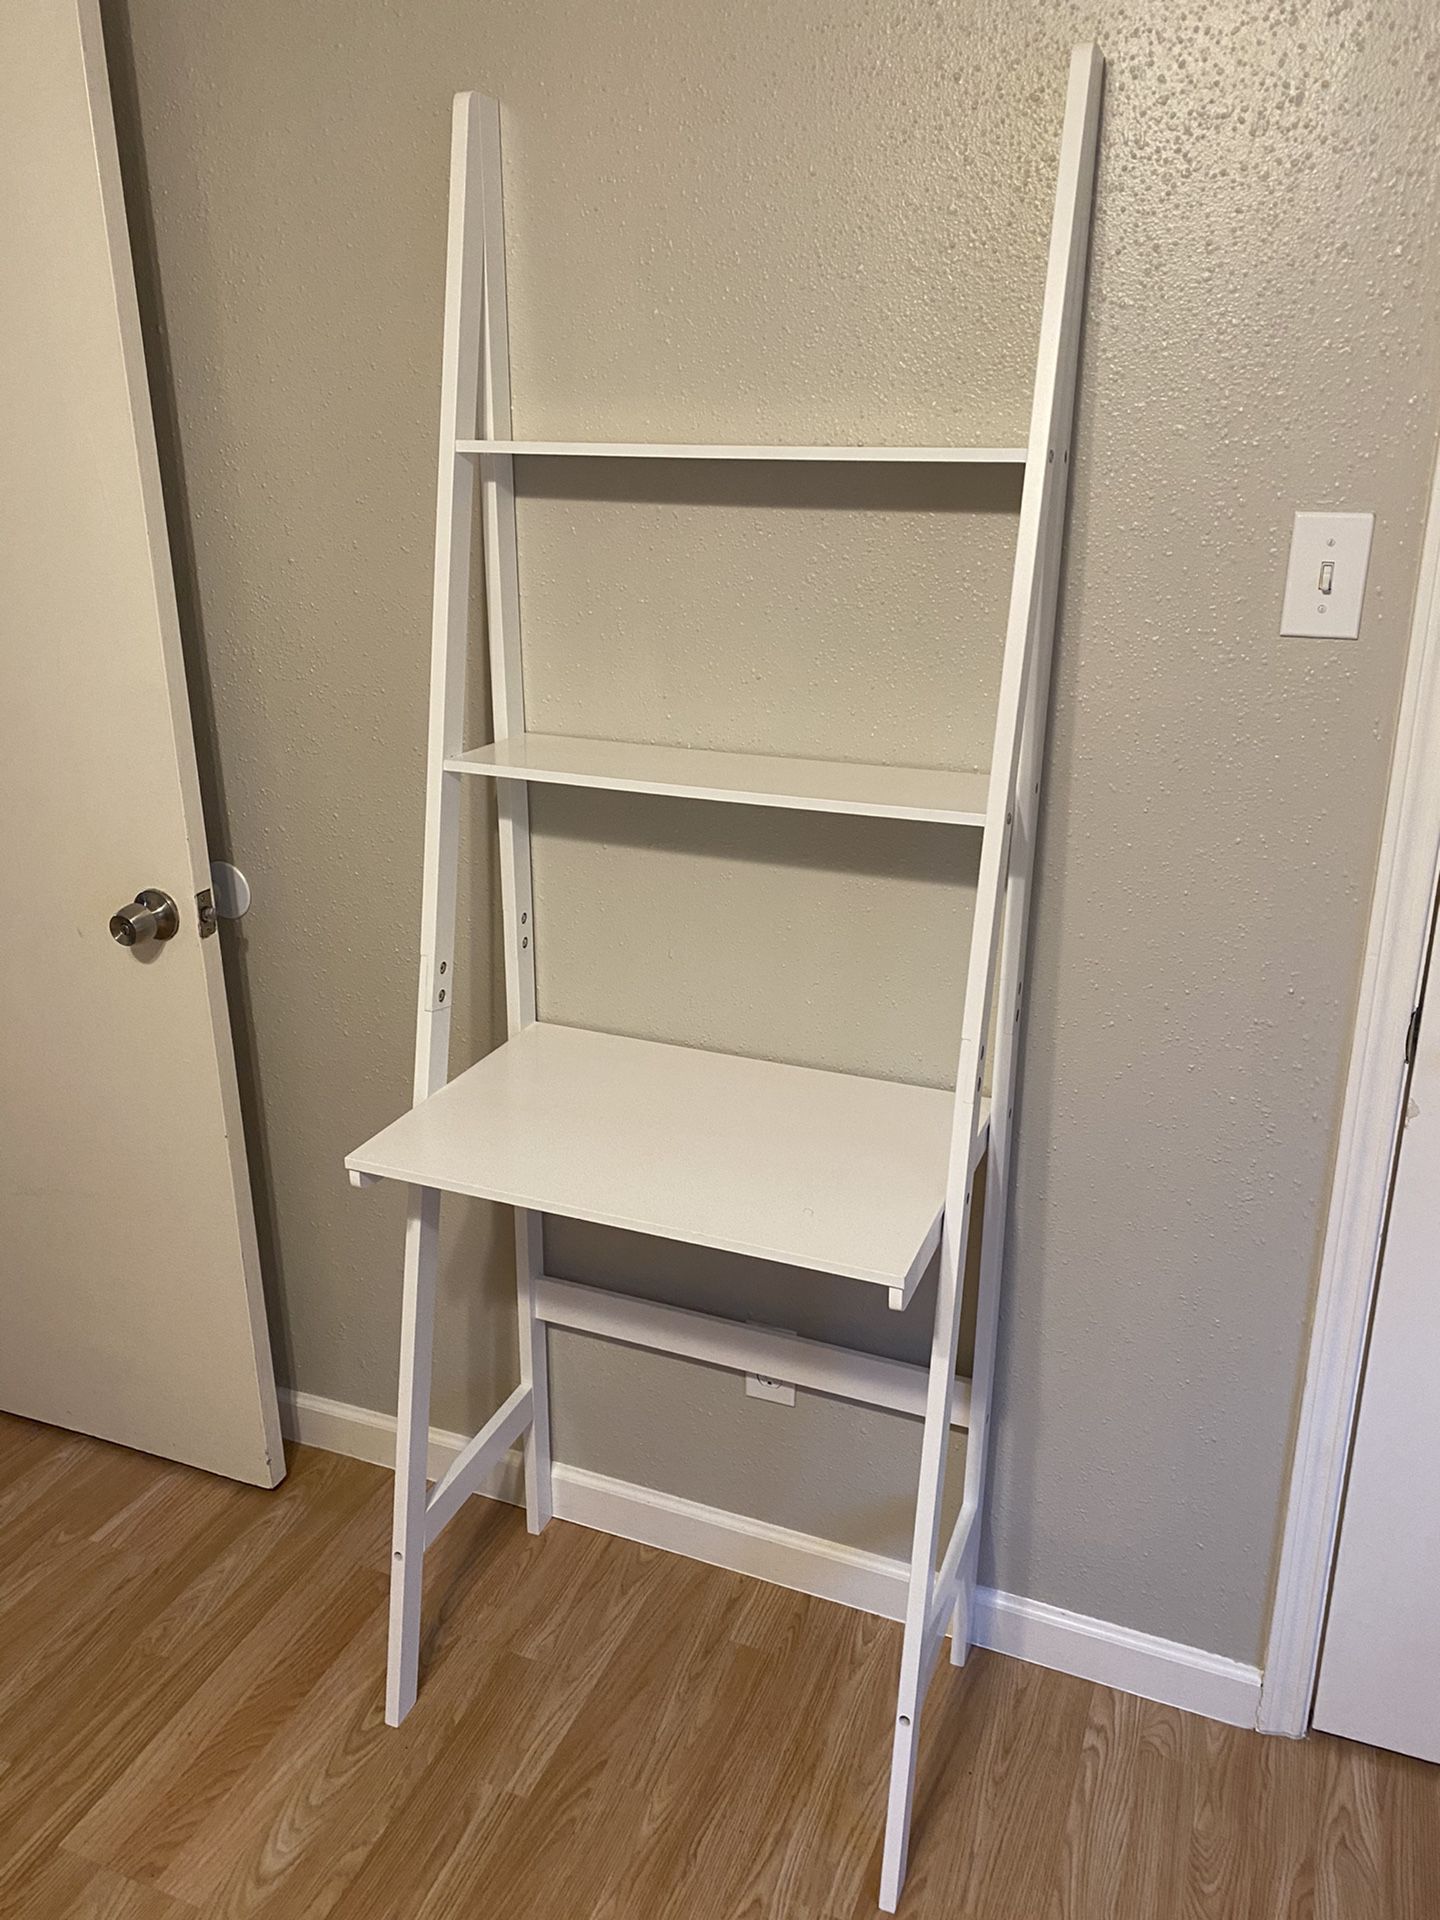 Ladder Shelf Desk